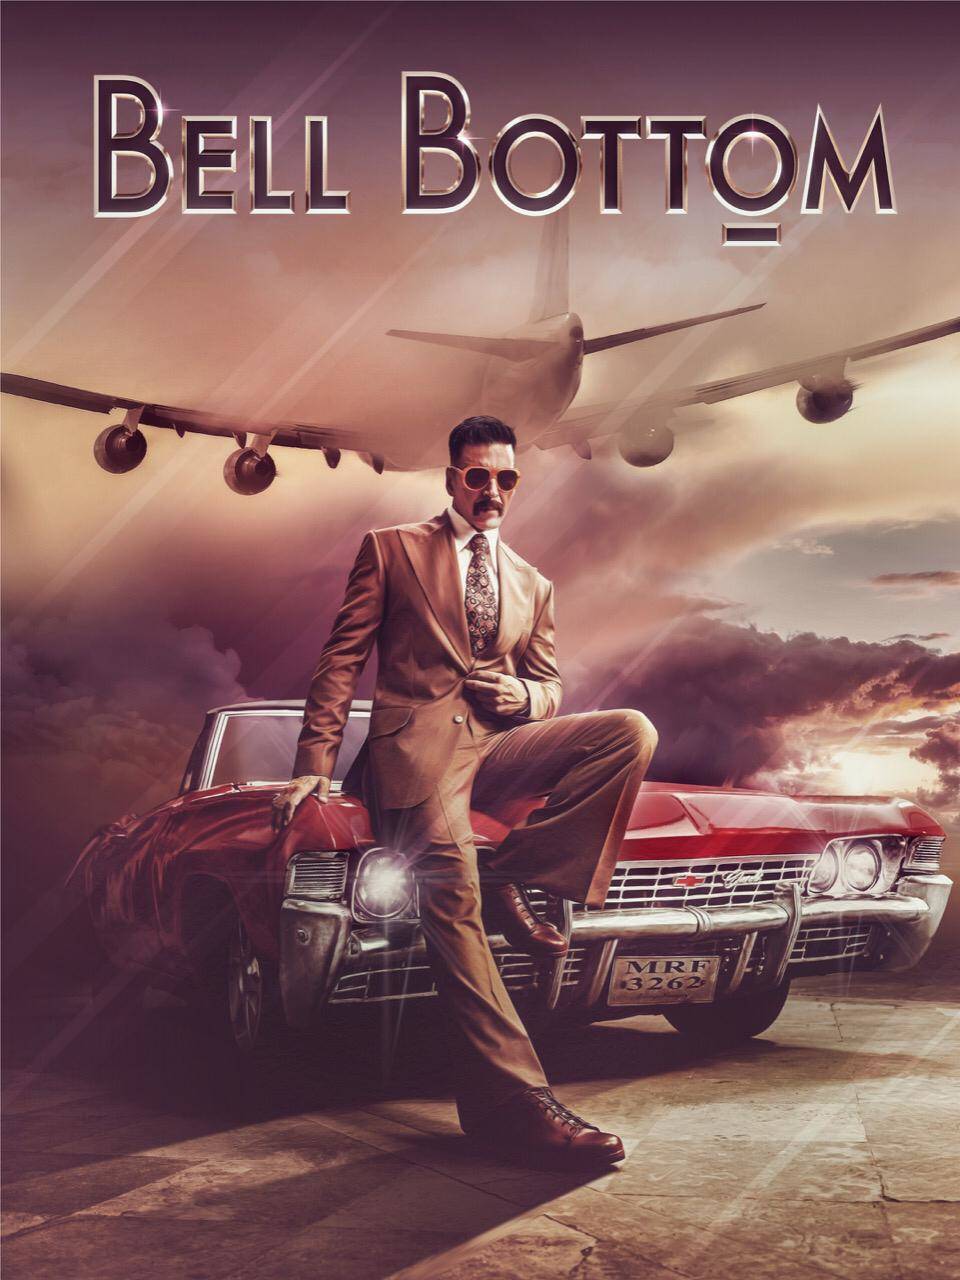 Image result for Bell bottom new poster